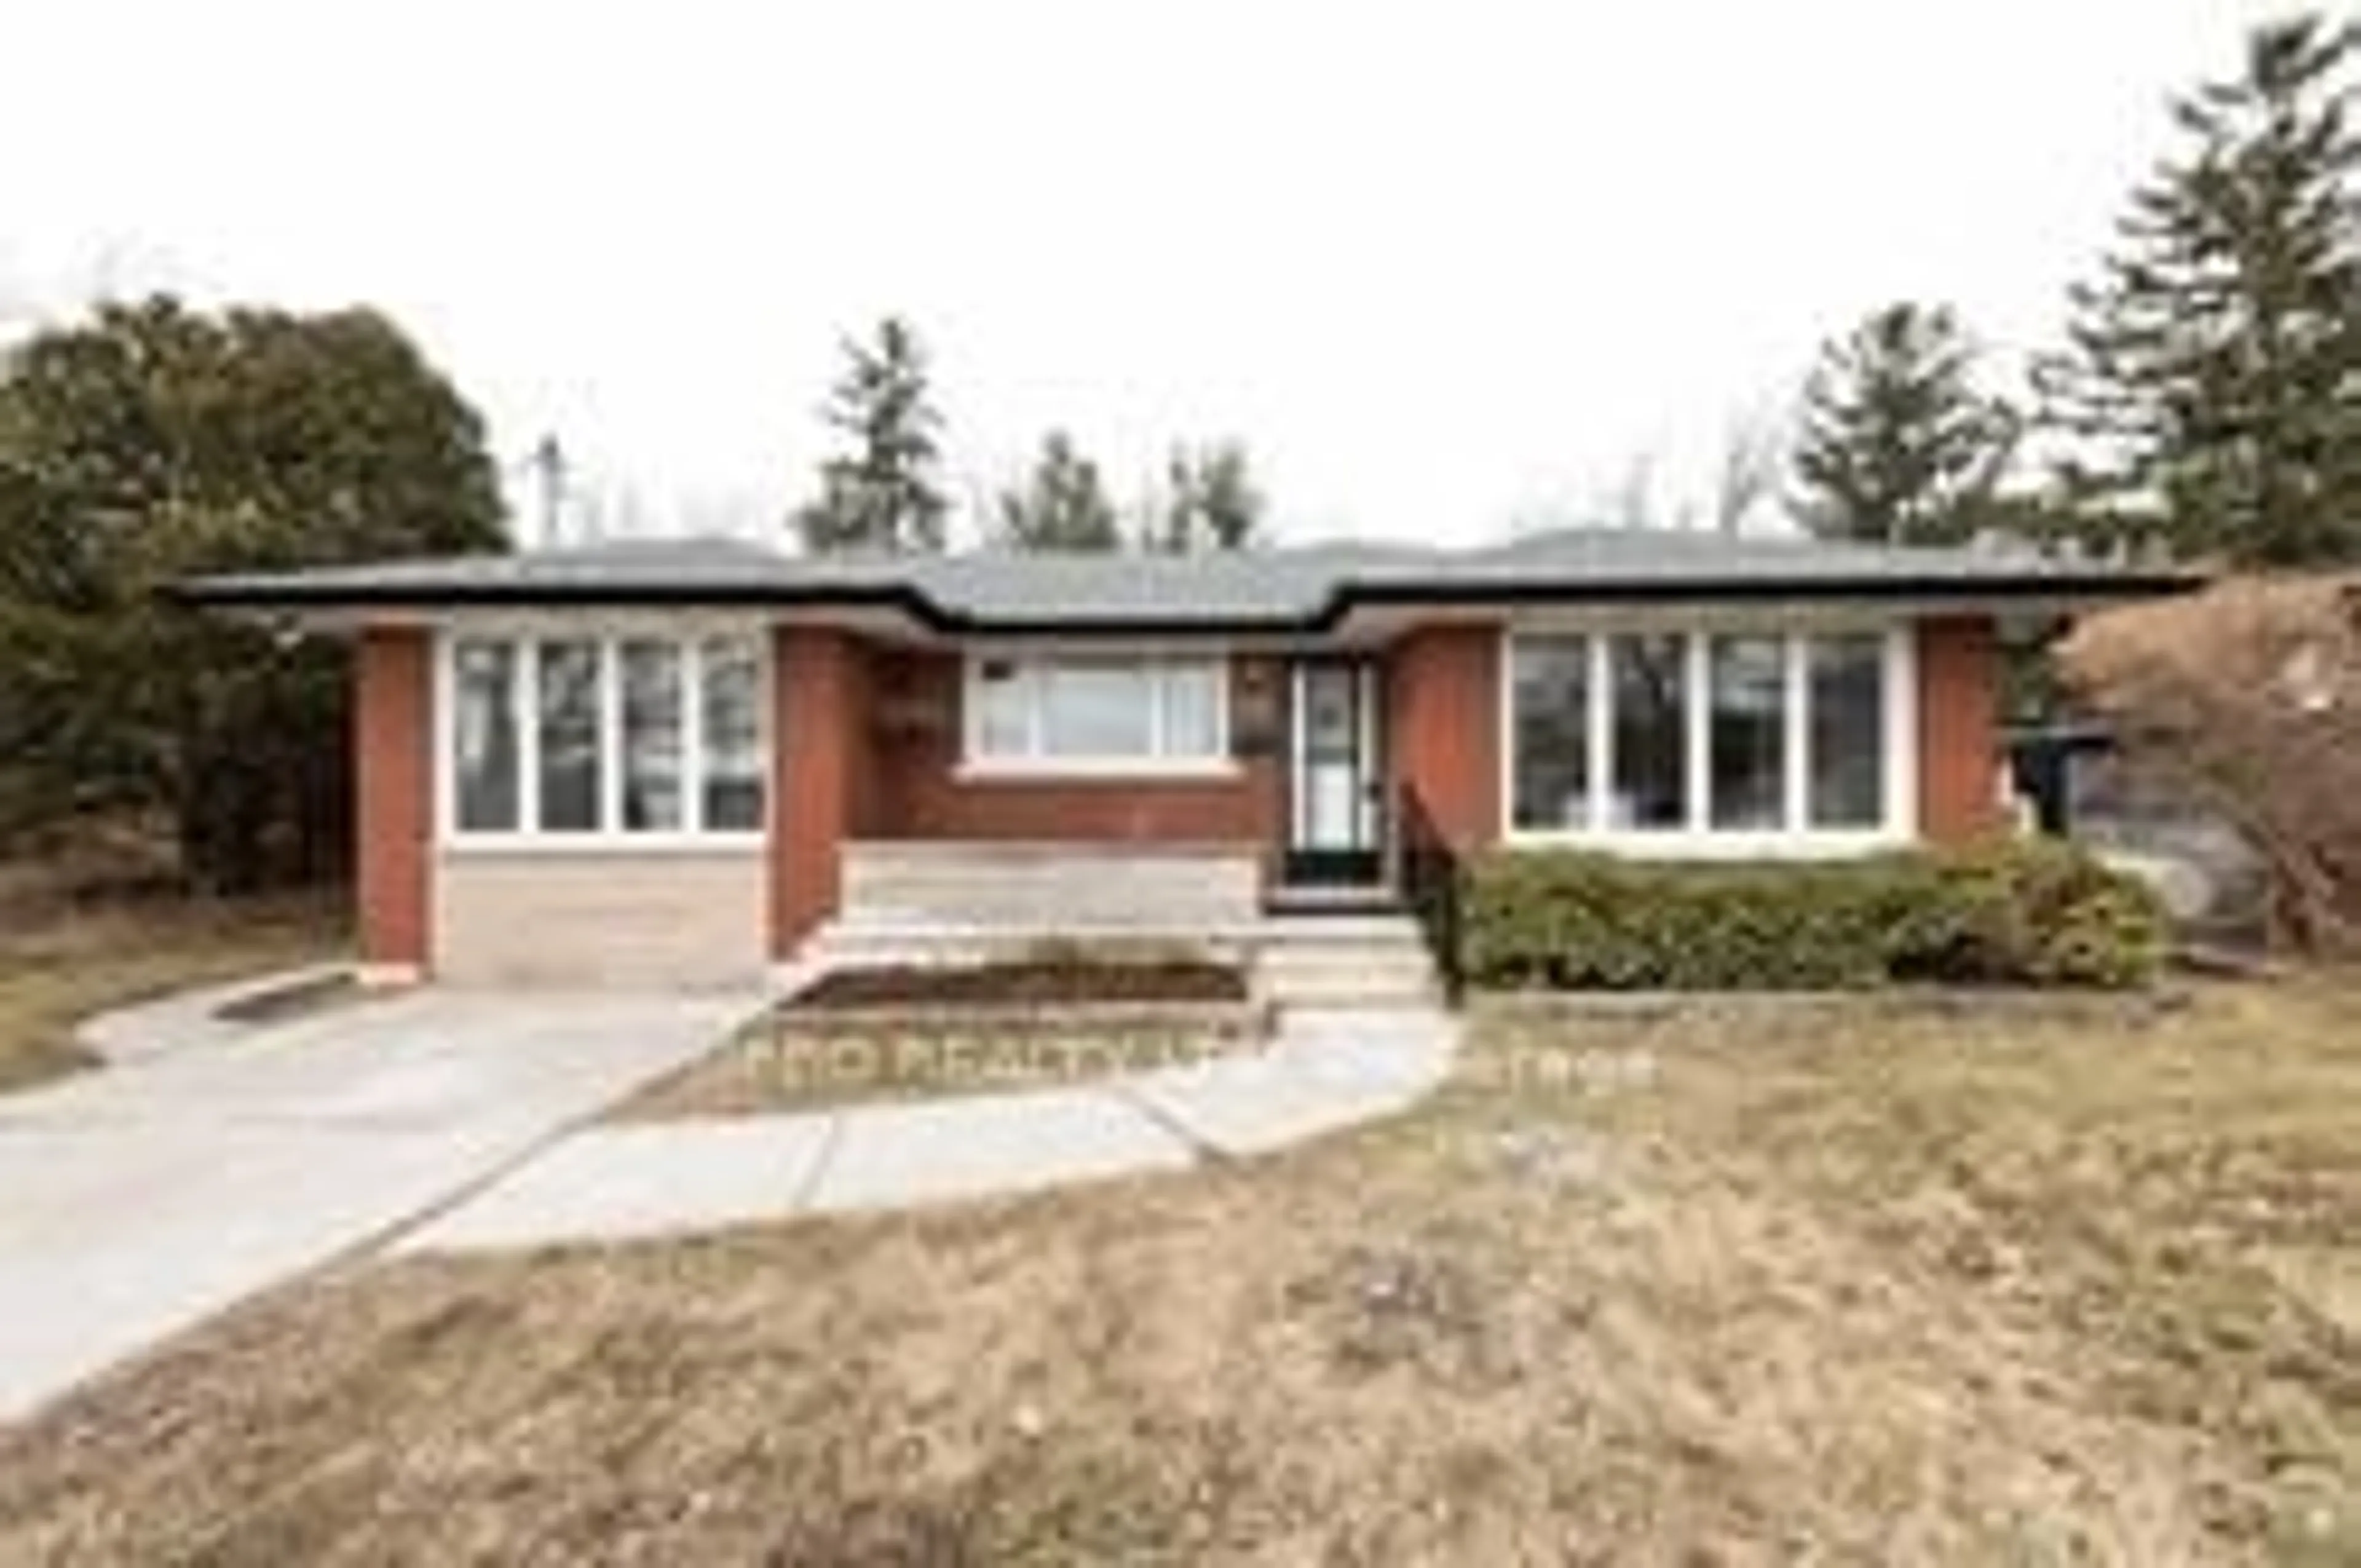 Home with brick exterior material for 284 Cedar Cres, Cambridge Ontario N1S 1X1